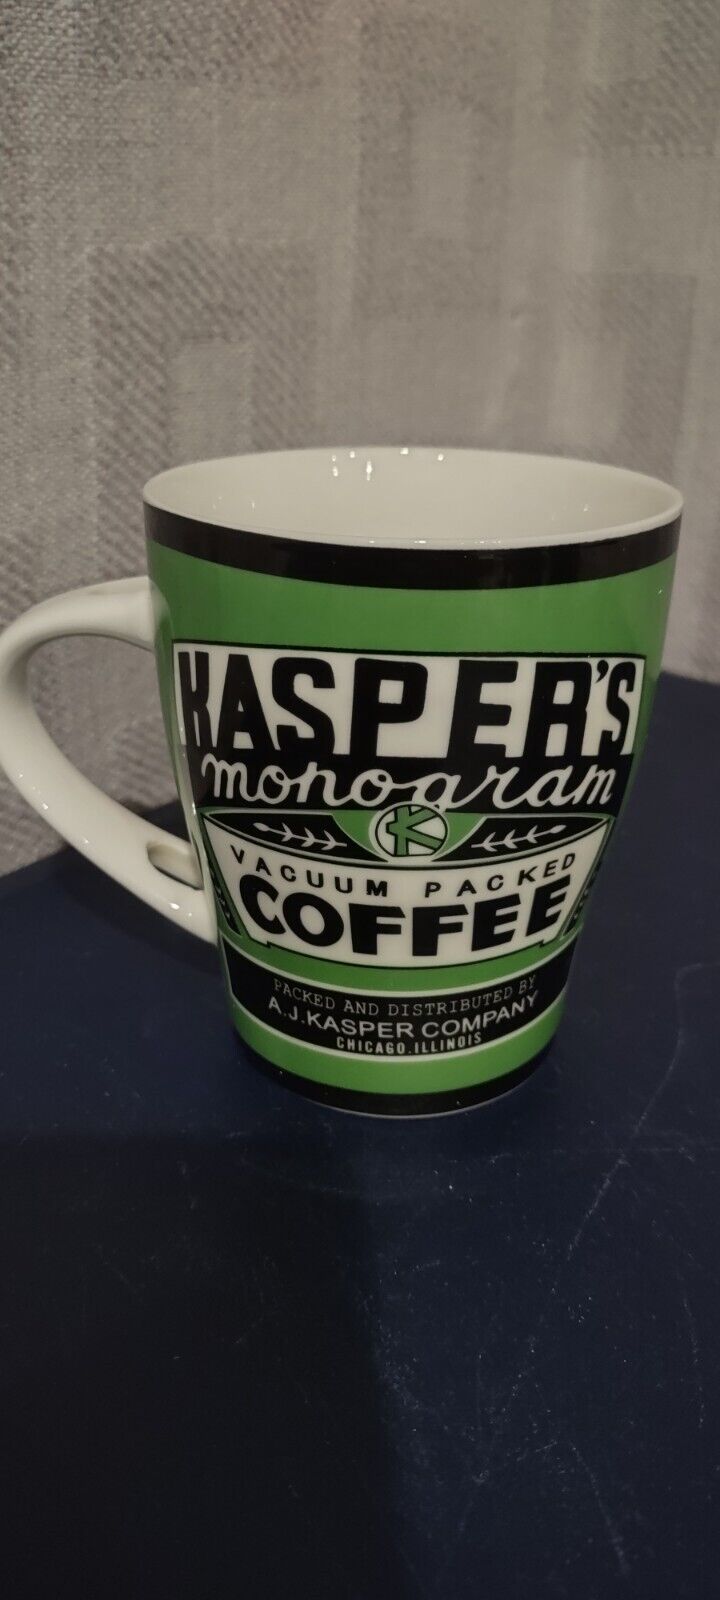 VTG Kasper’s Monogram Vacuum Packed Coffee Mug Cup ceramic vintage 12 oz